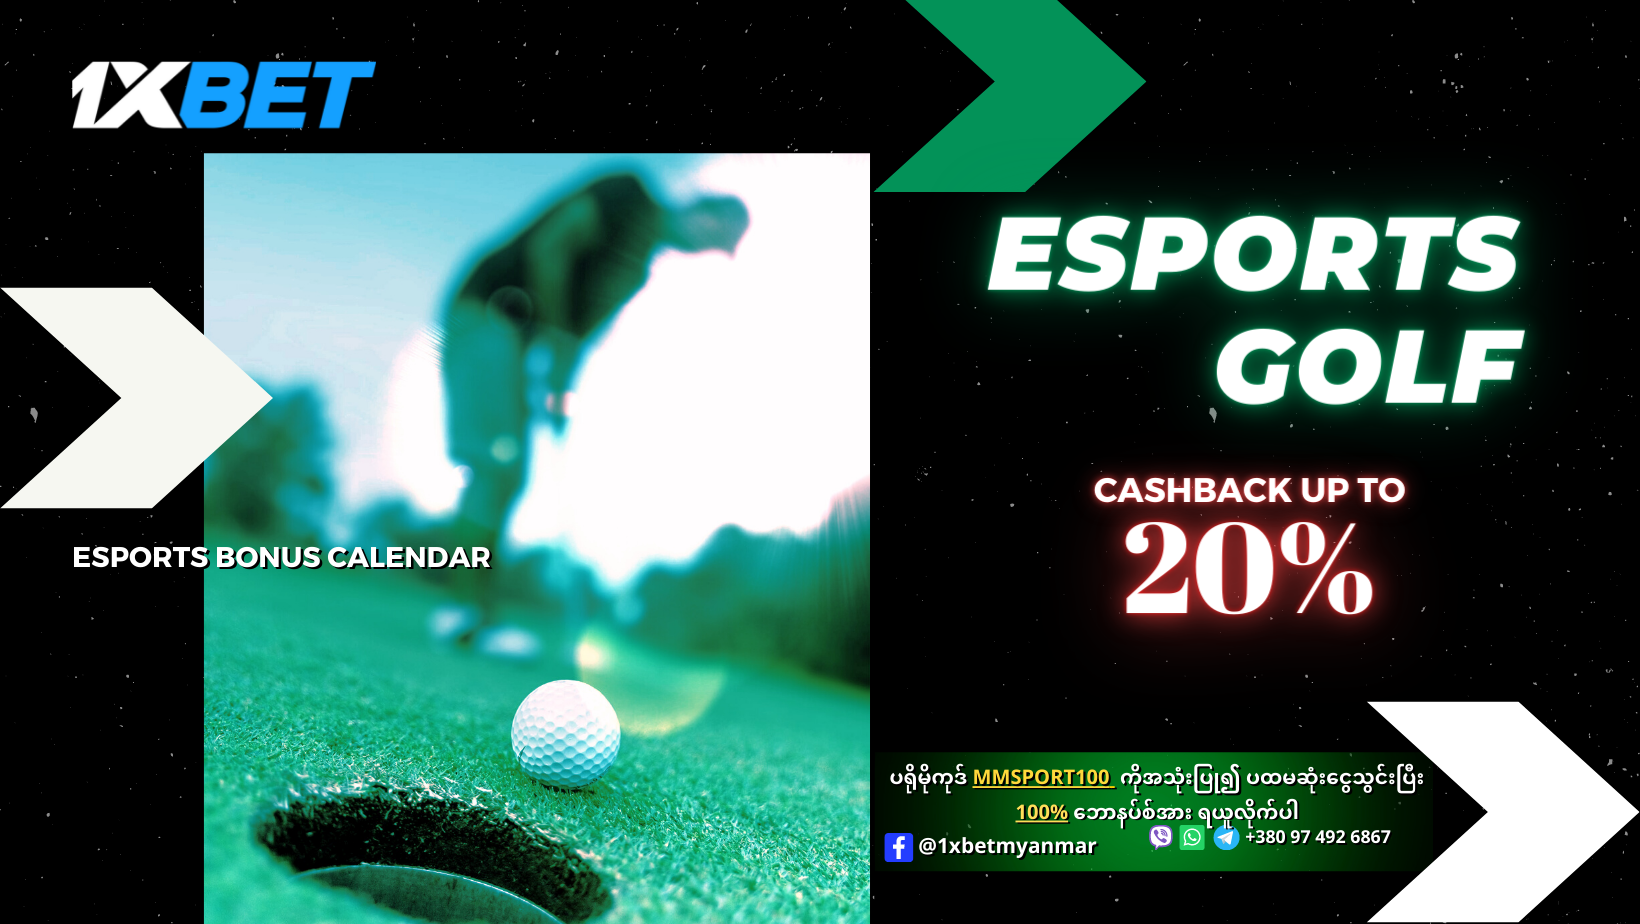 1xBet Esports Golf Promotion